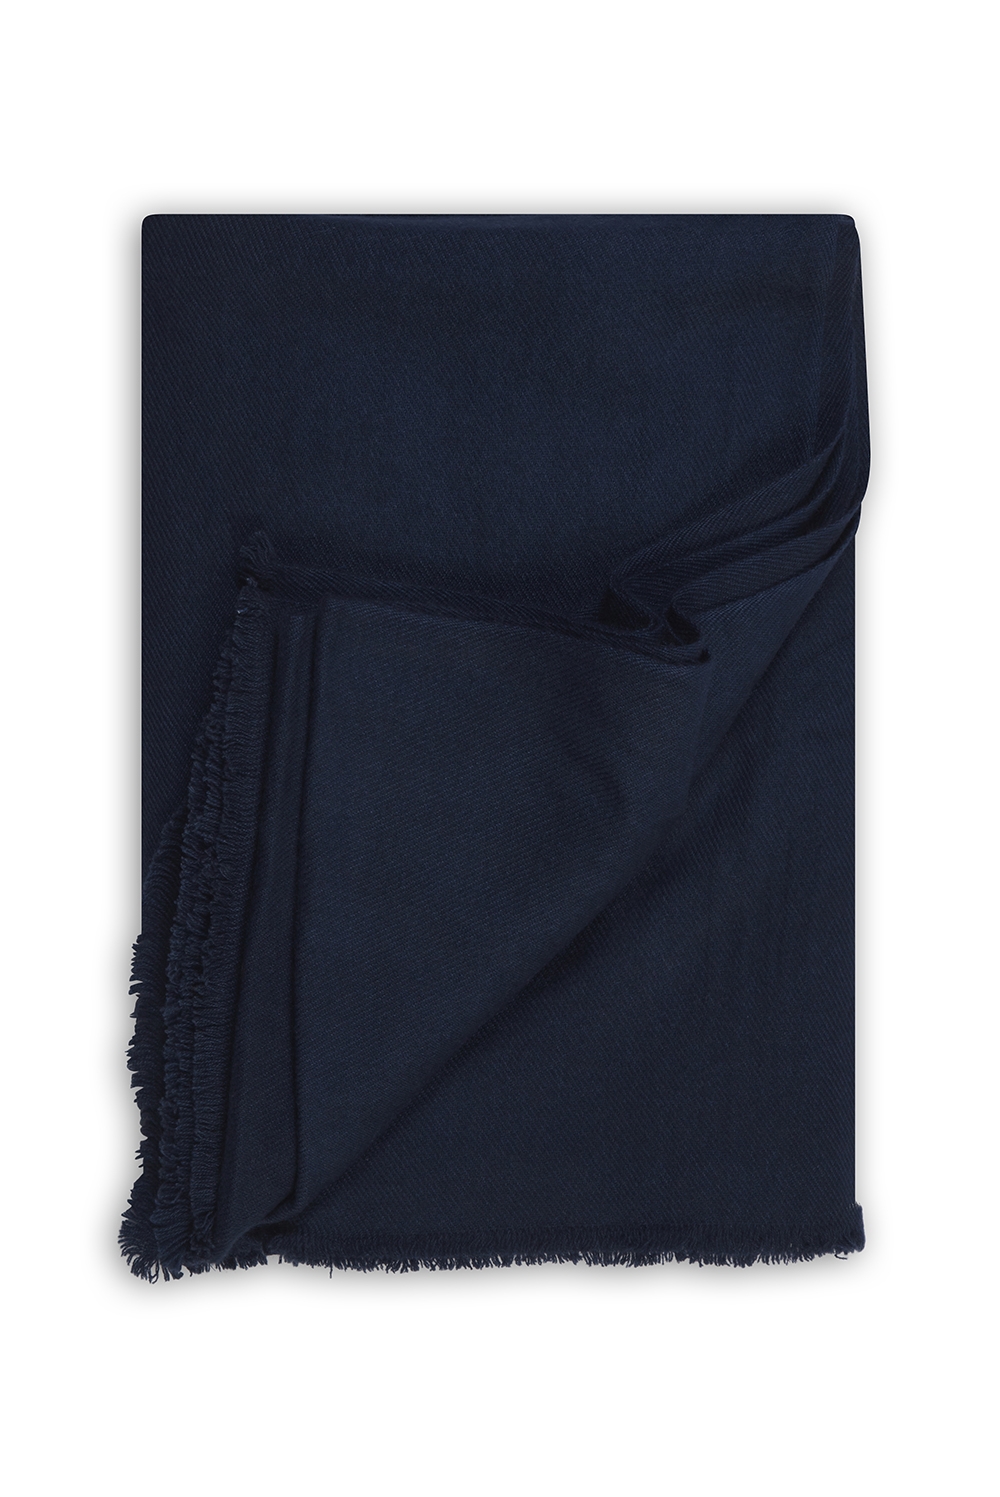 Cashmere accessori cocooning toodoo plain l 220 x 220 blu navy 220x220cm